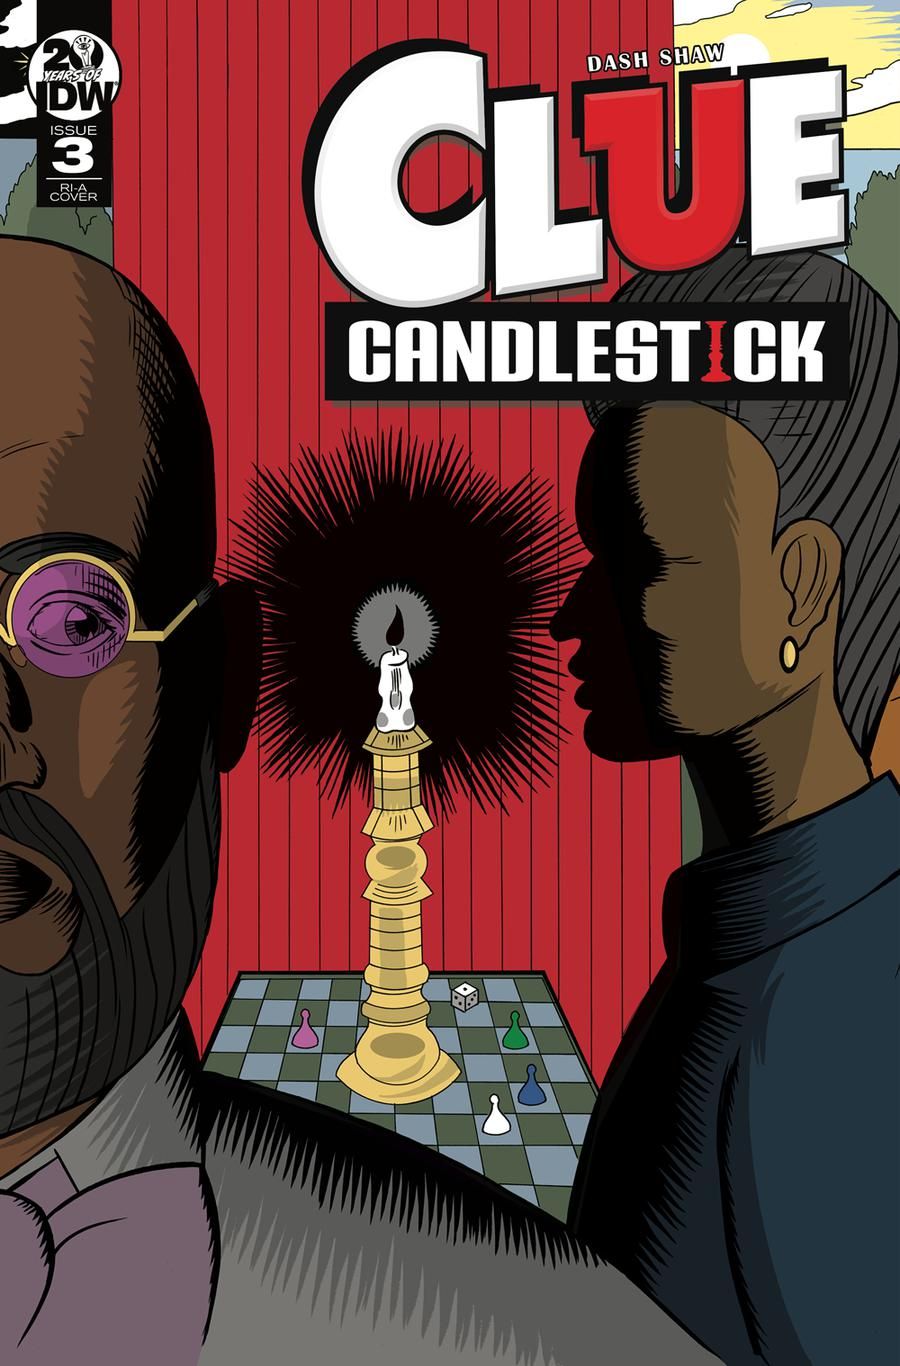 Clue Candlestick #03 (cover B - Dash Shaw)